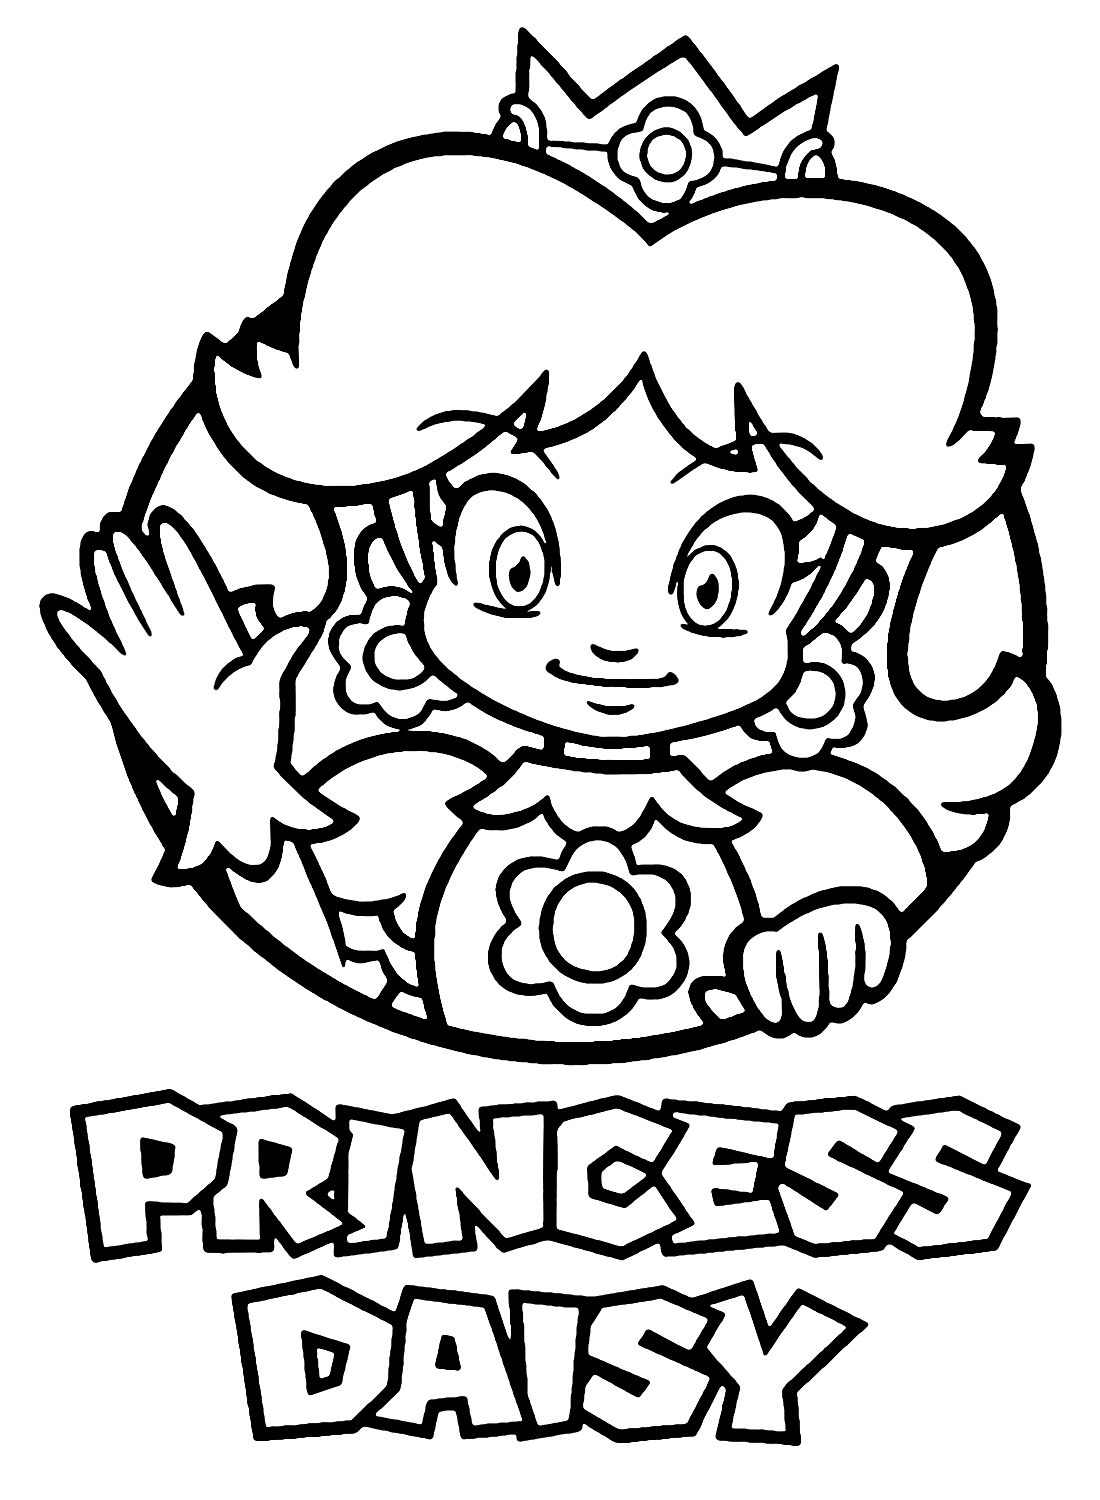 Super Mario Bros. Prinzessin Daisy von Prinzessin Daisy